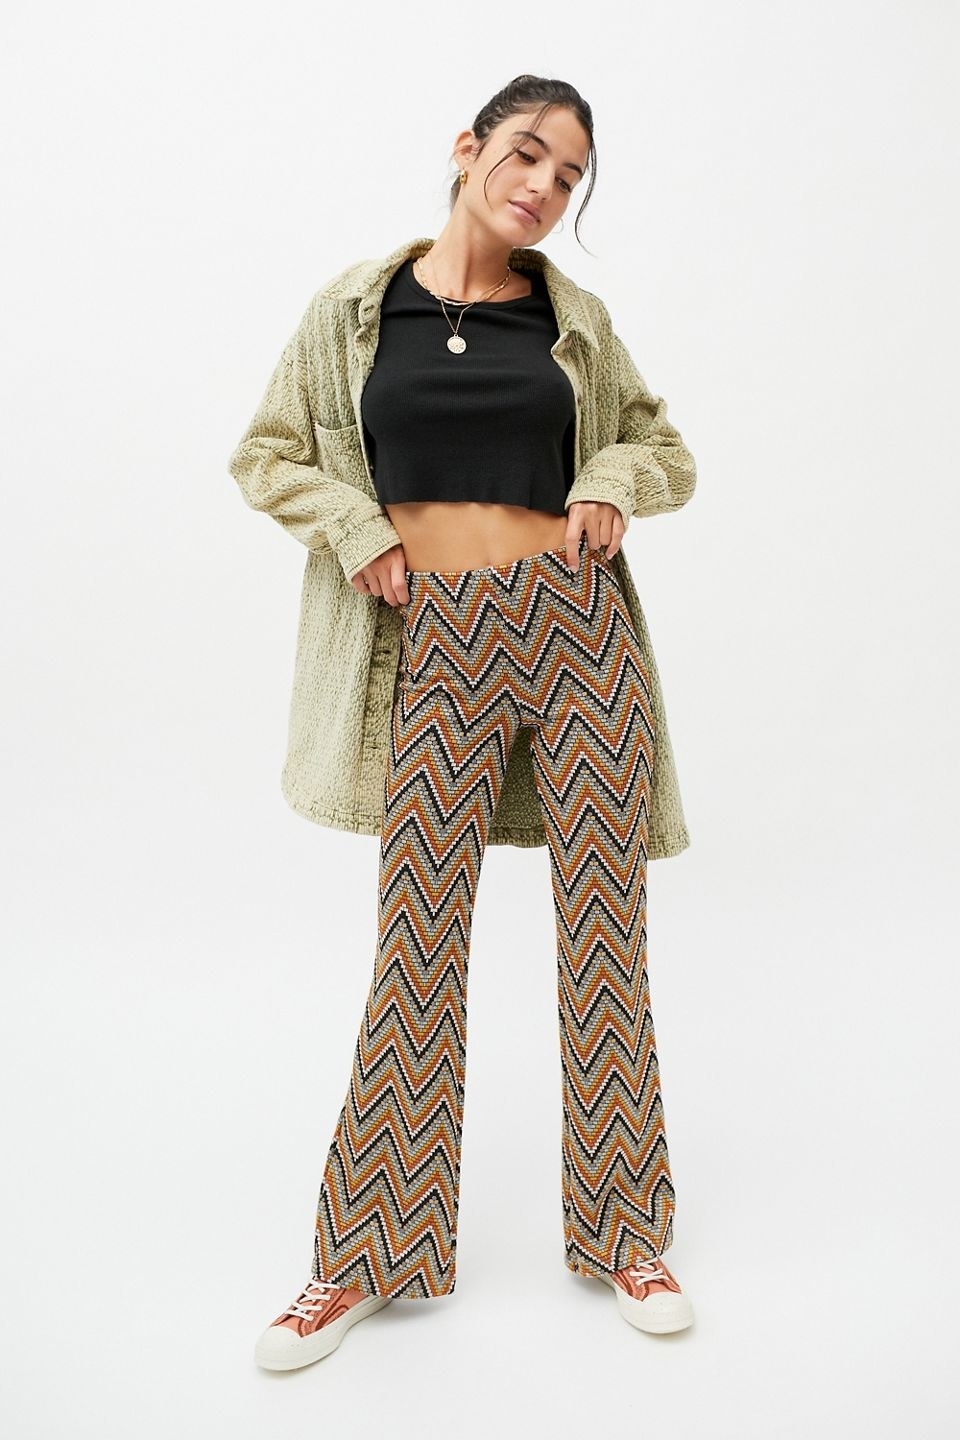 model wearing the orange and black zig-zag pattern pants